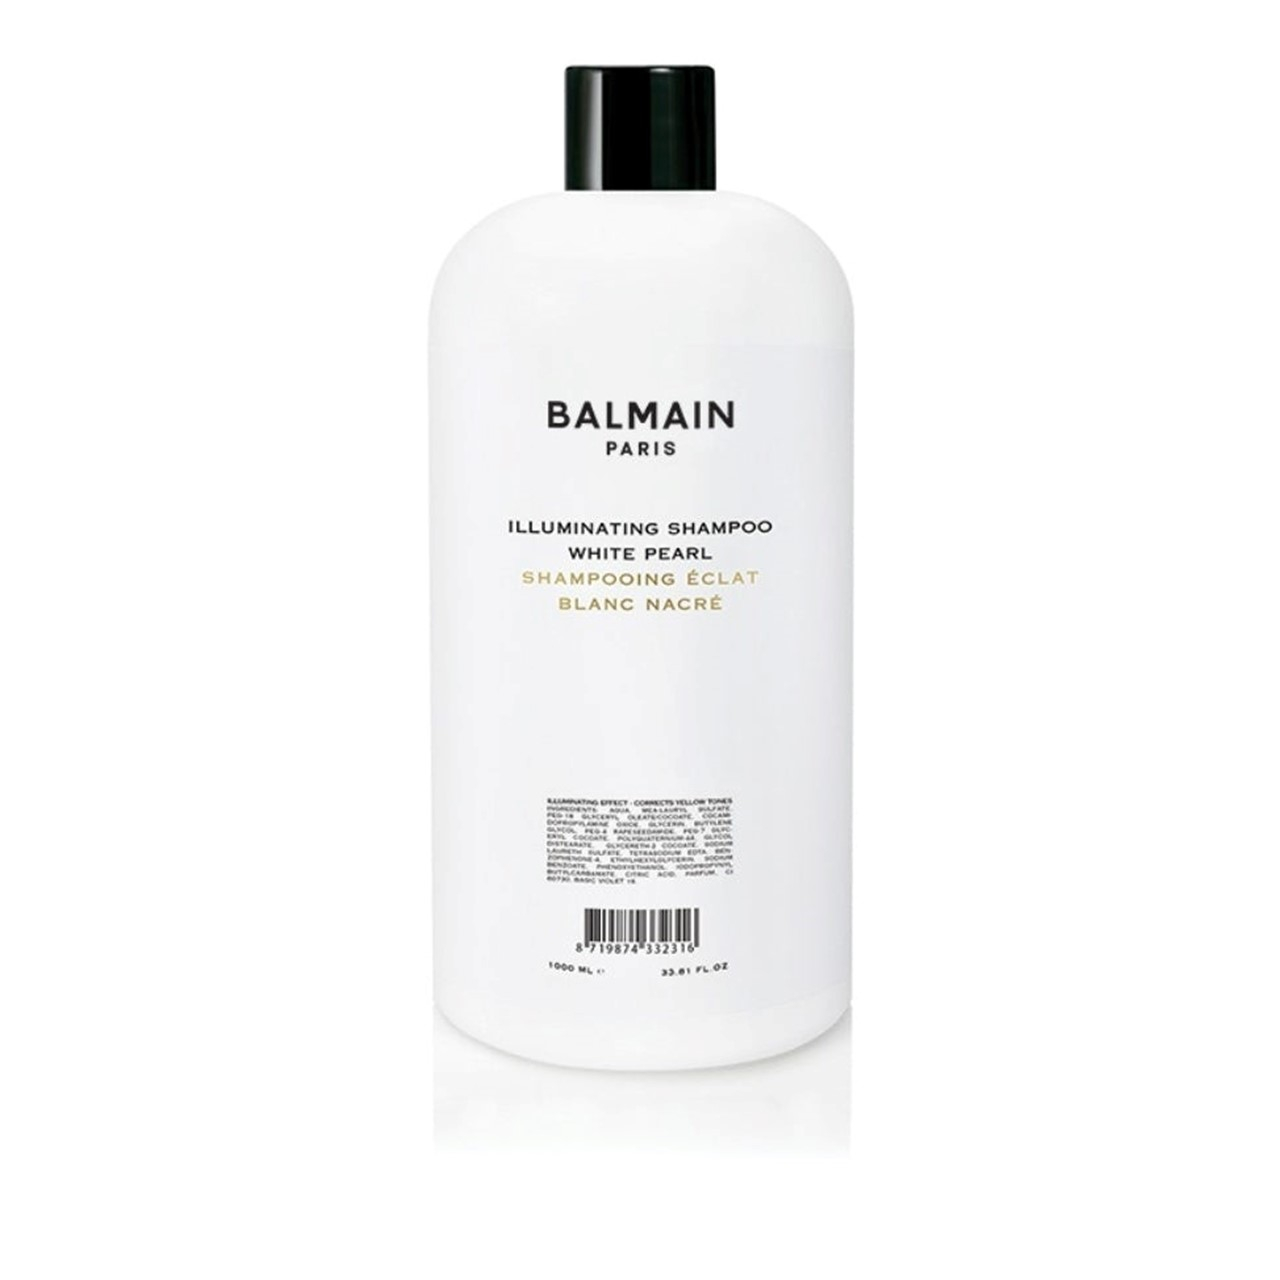 Balmain Hair Illuminating Shampoo White Pearl 1L (33.81 fl oz)